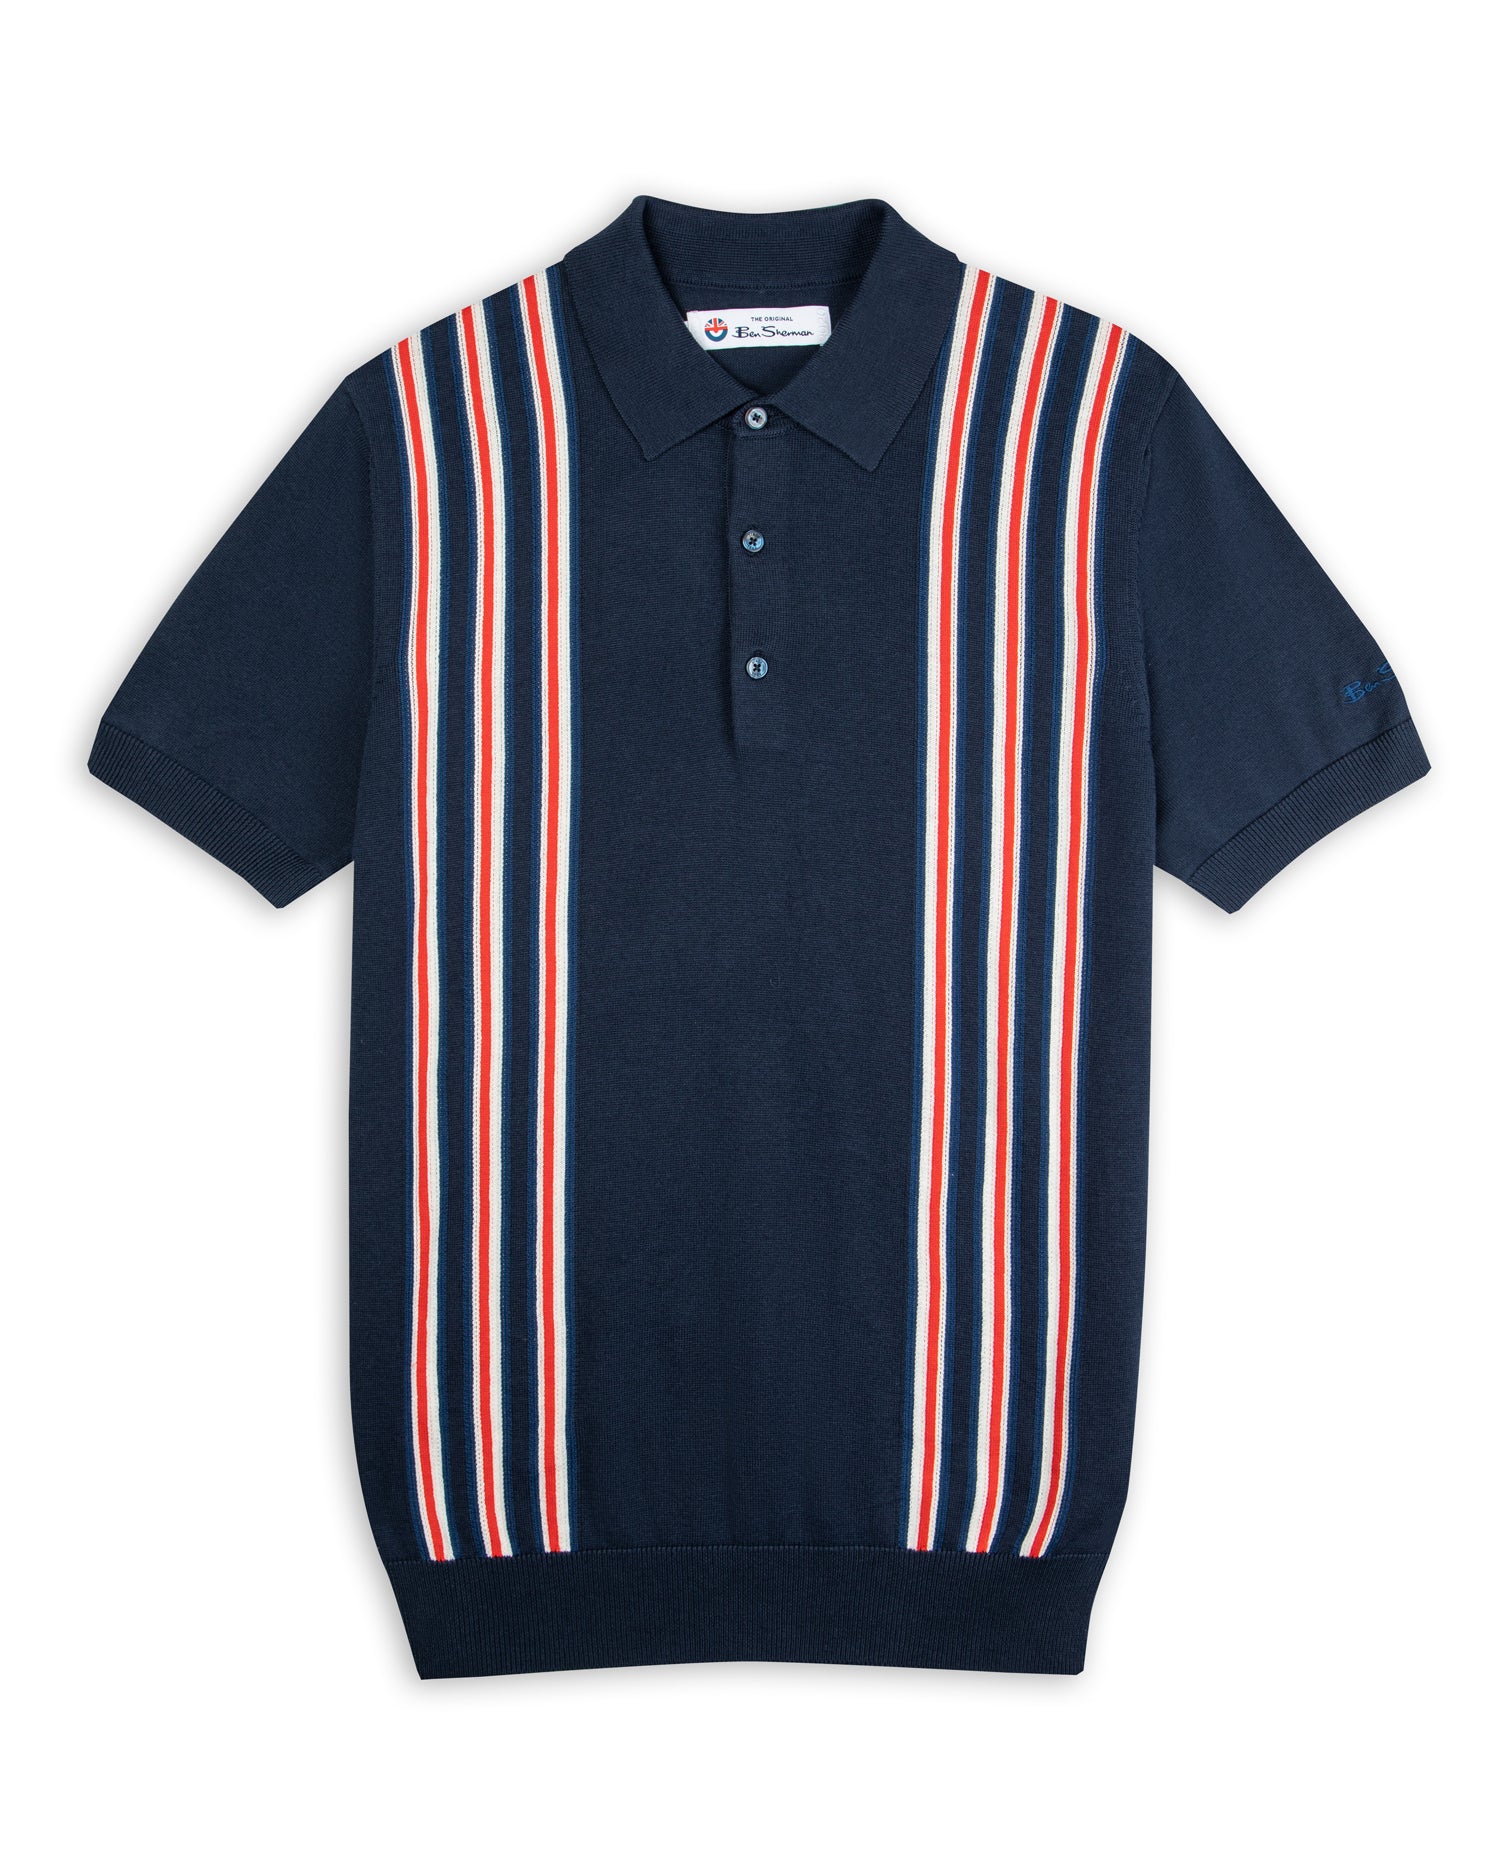 Team GB Men's Union Stripe Knit Polo - Midnight – Ben Sherman